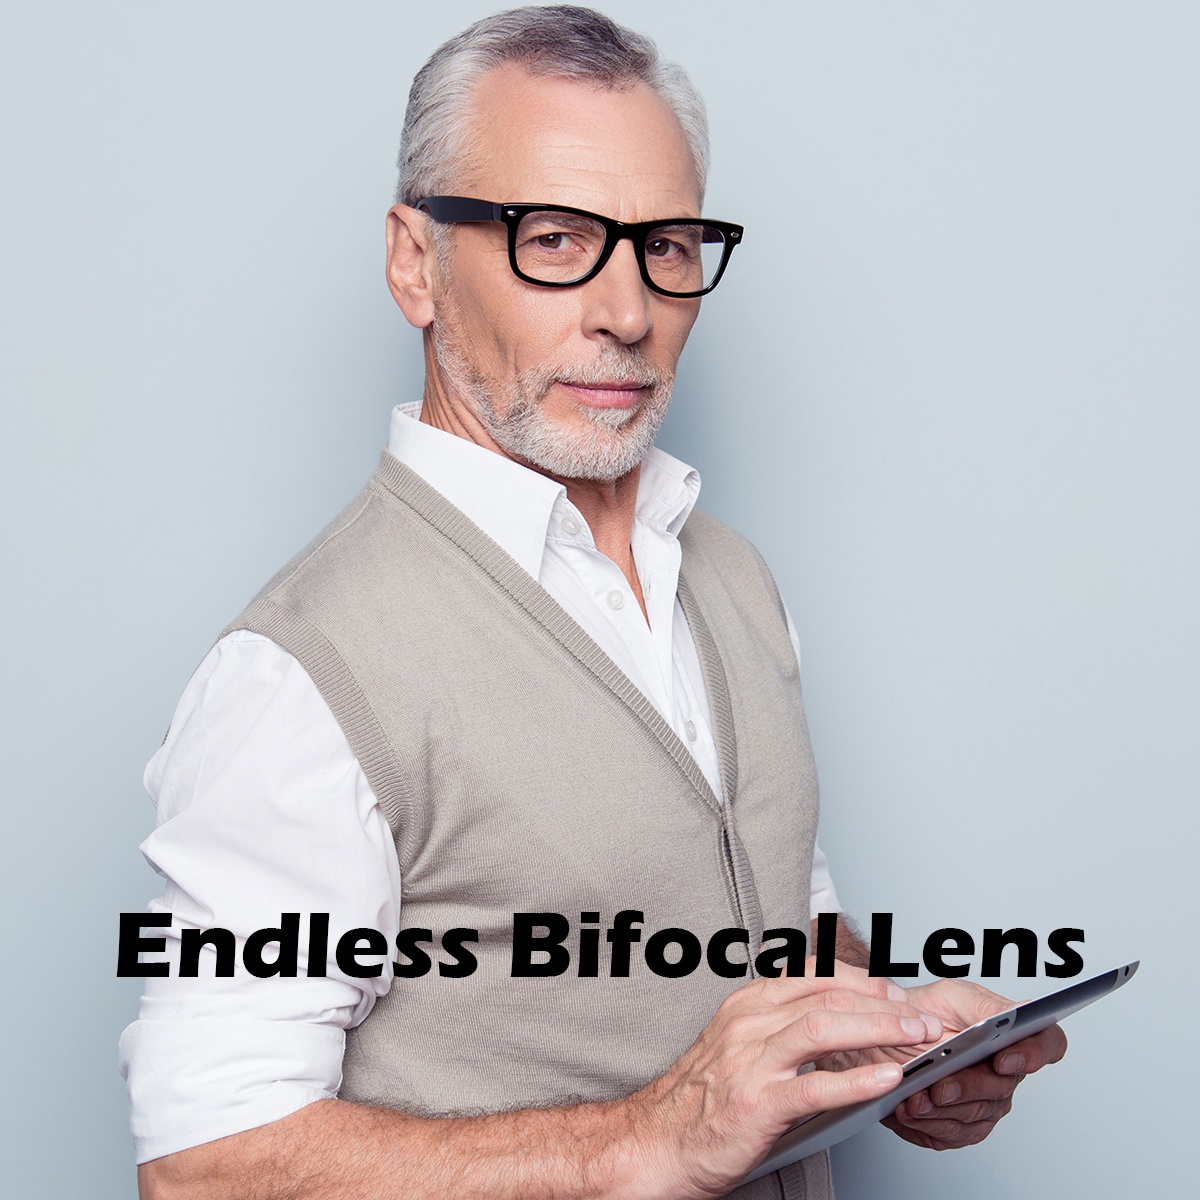 Endless Bifocal Lenses